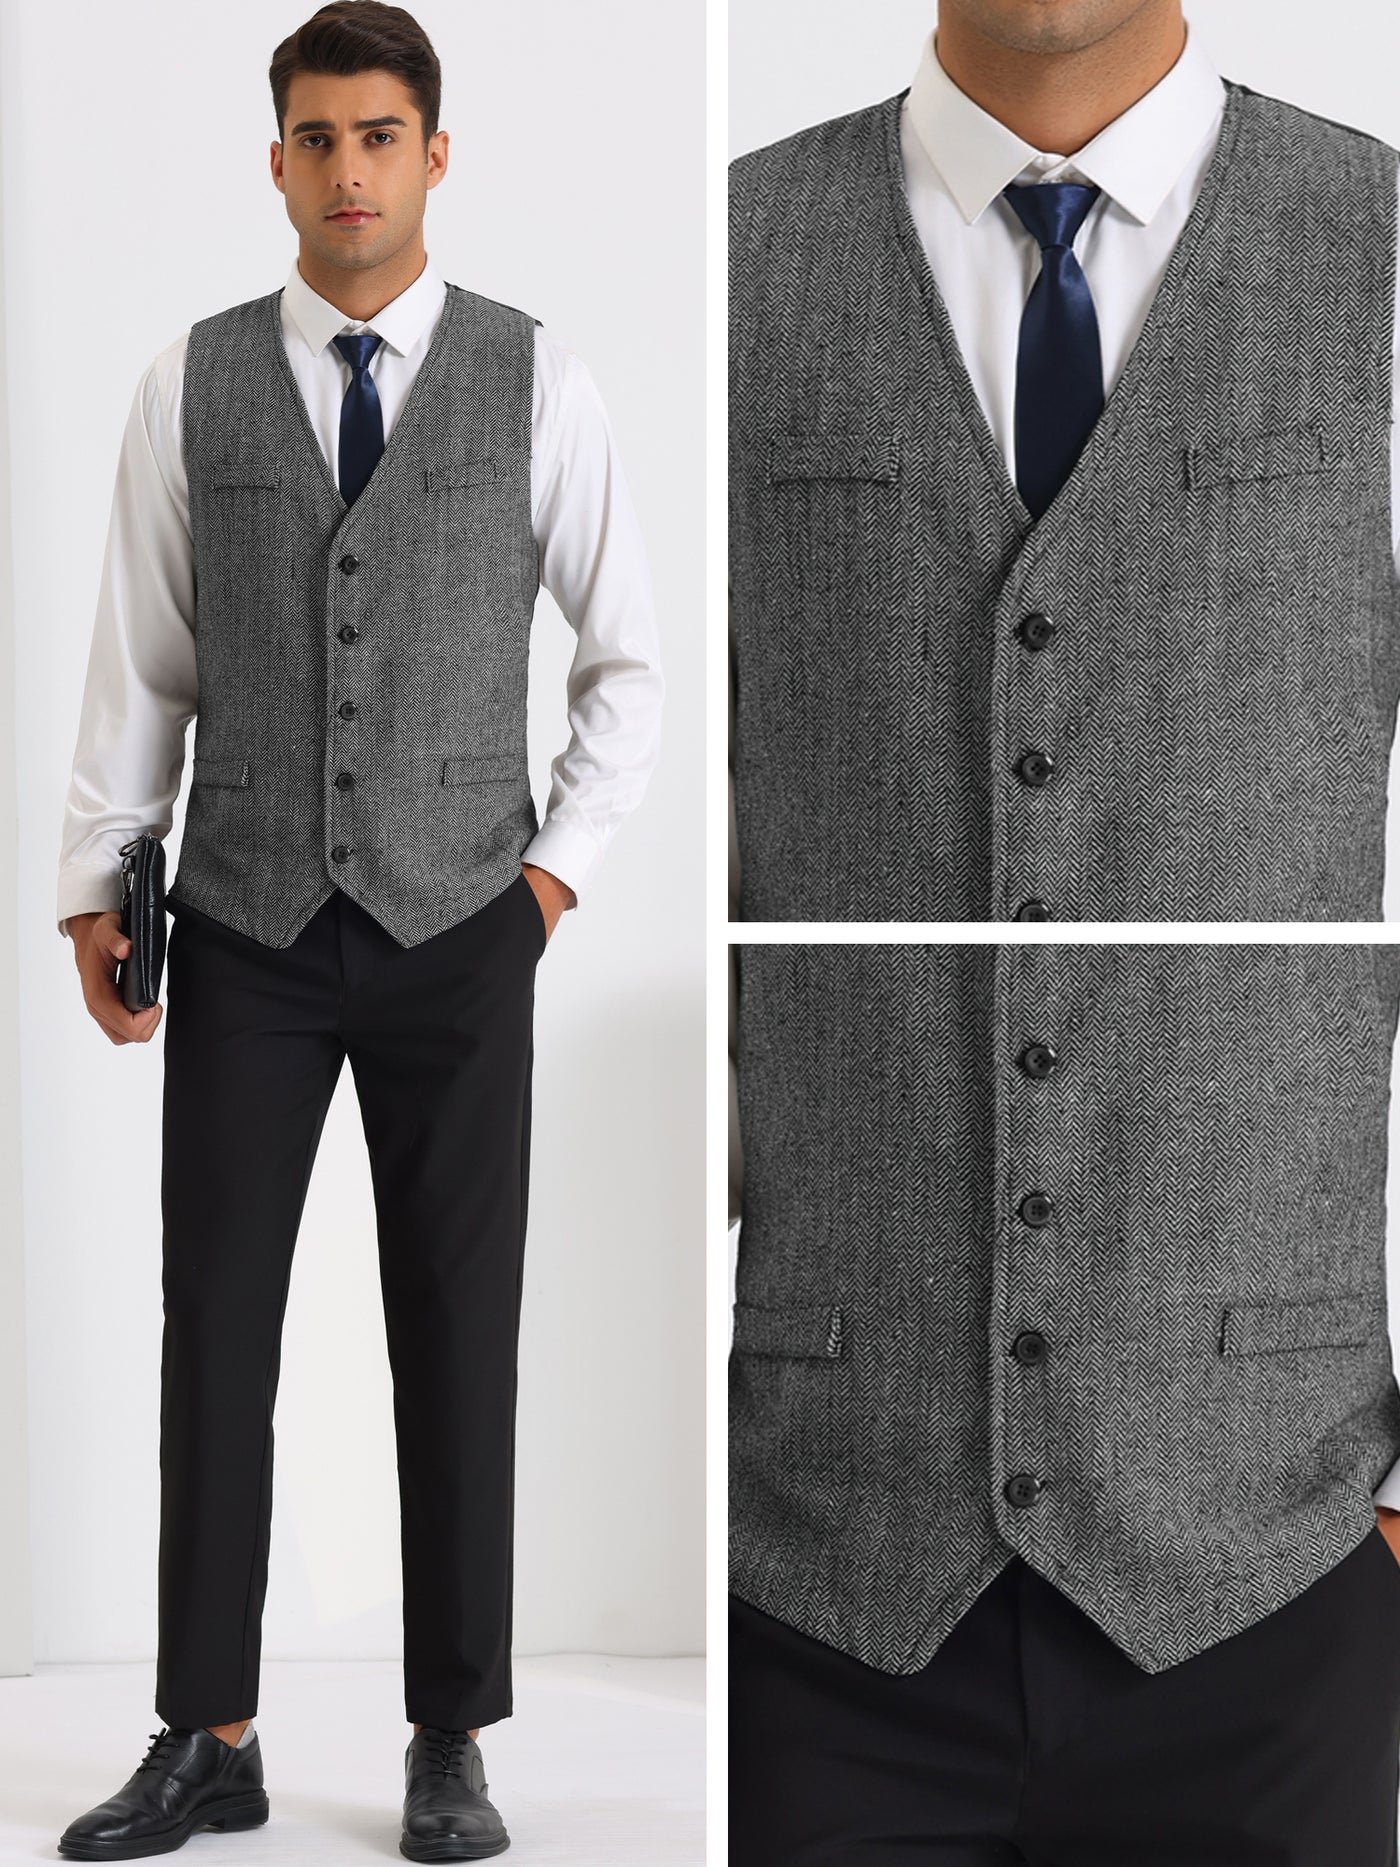 Bublédon Herringbone Suits Vest for Men's Classic Slim Fit Business Formal Dress Waistcoat